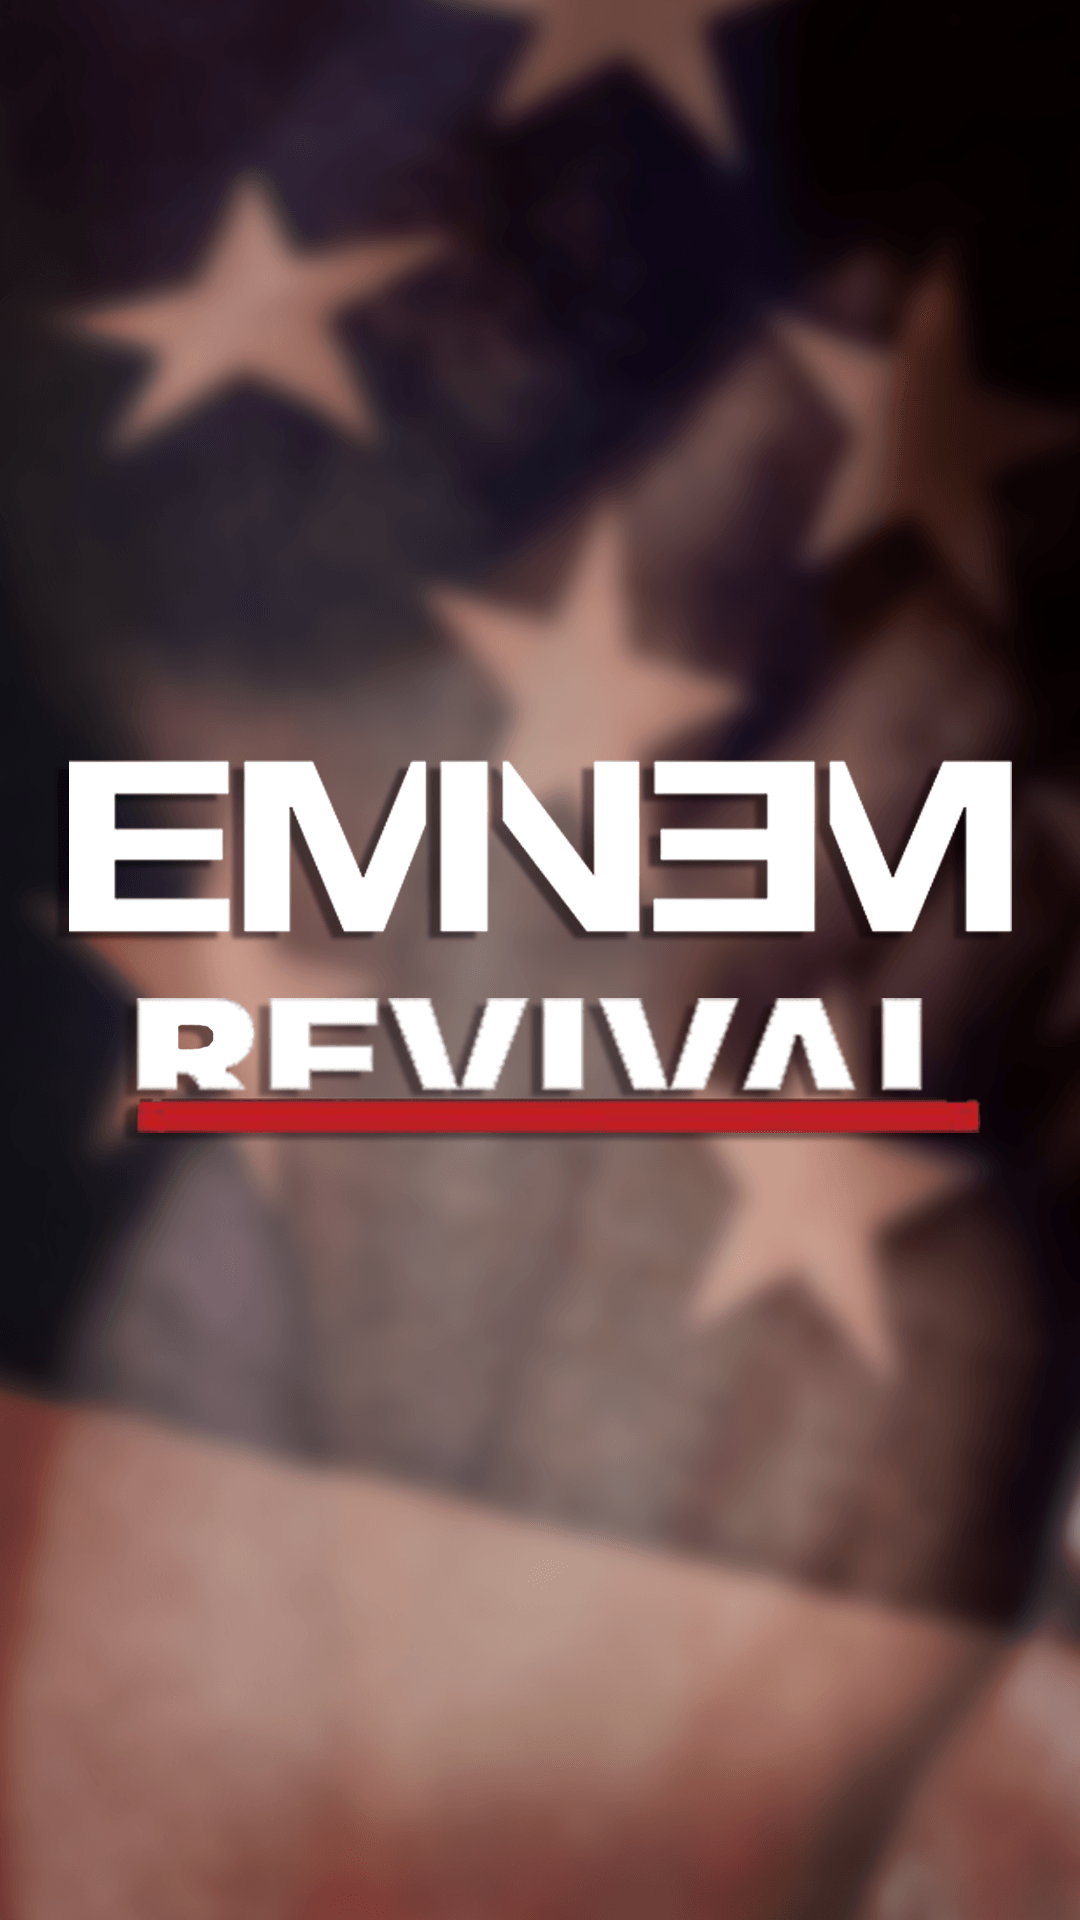 Eminem Revival Wallpapers Top Free Eminem Revival